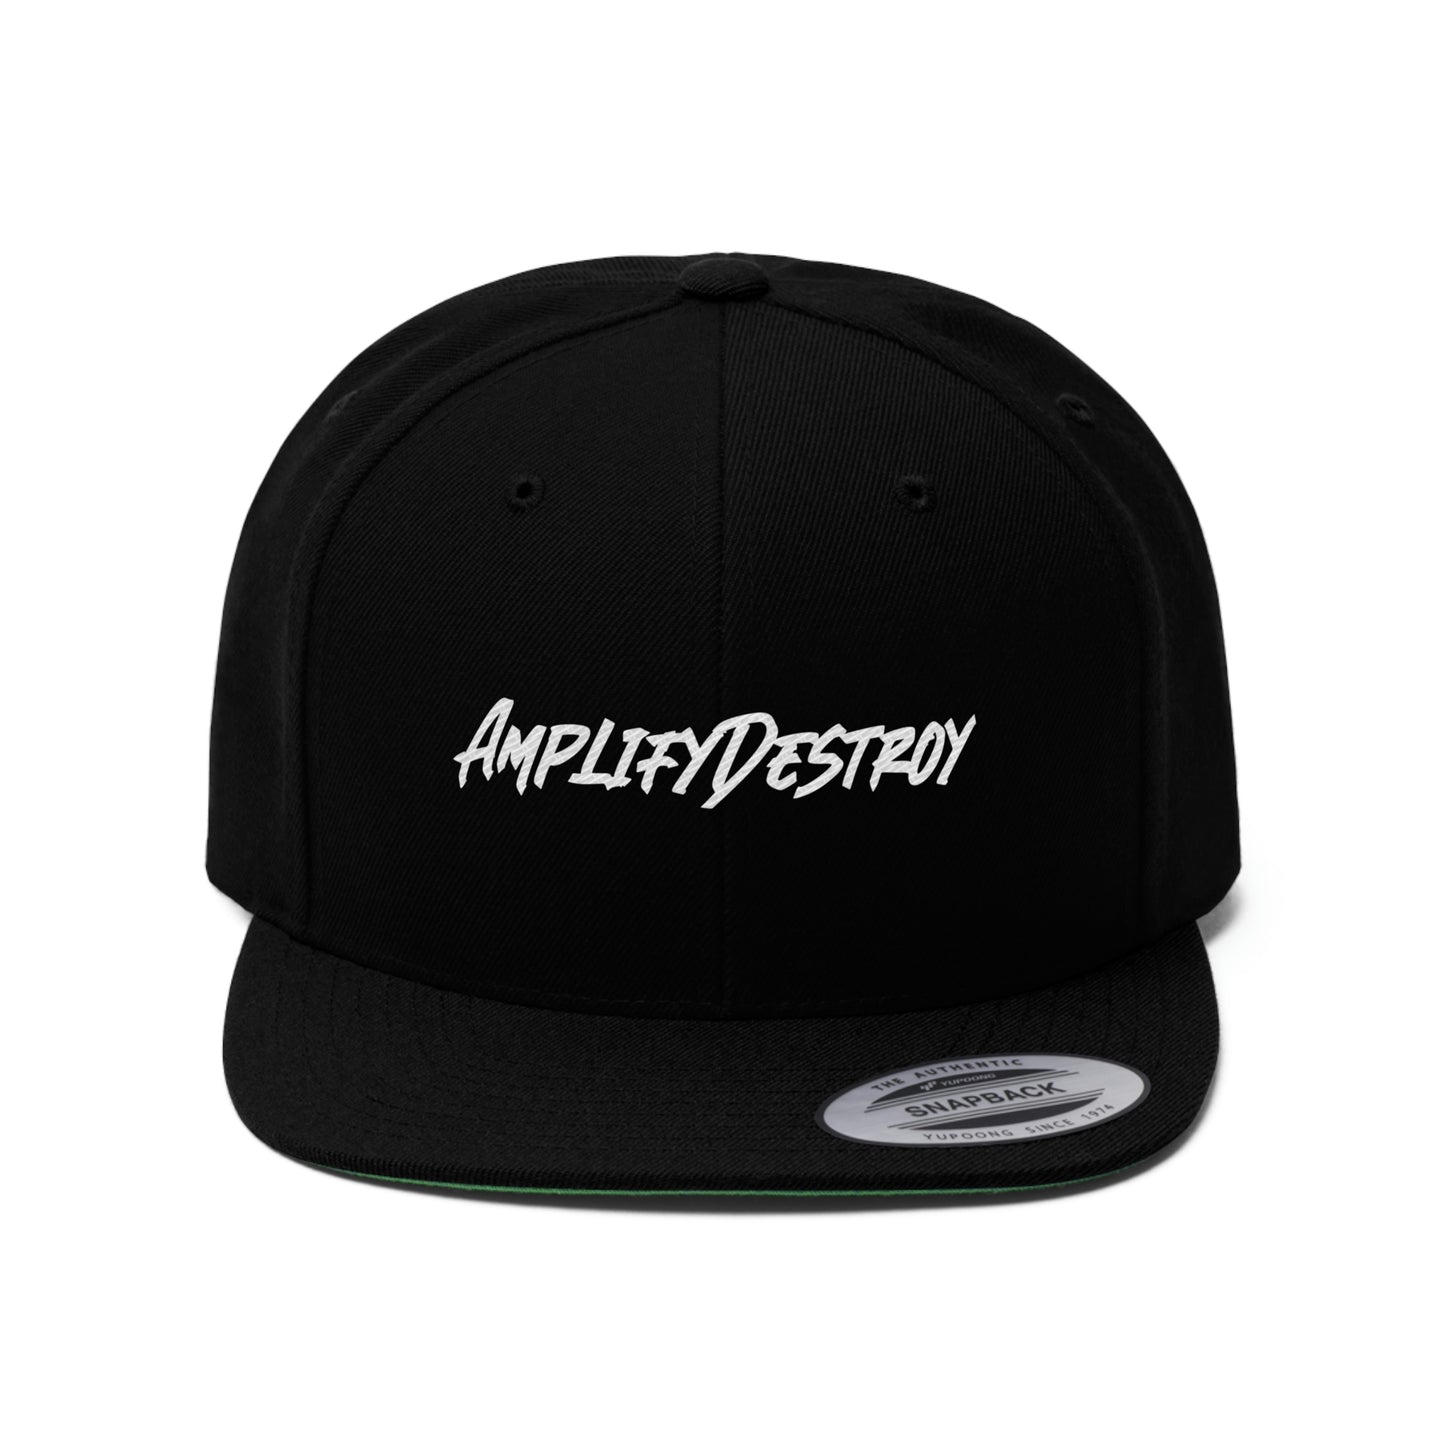 AMPLIFYDESTROY Embroidered Snapback Cap